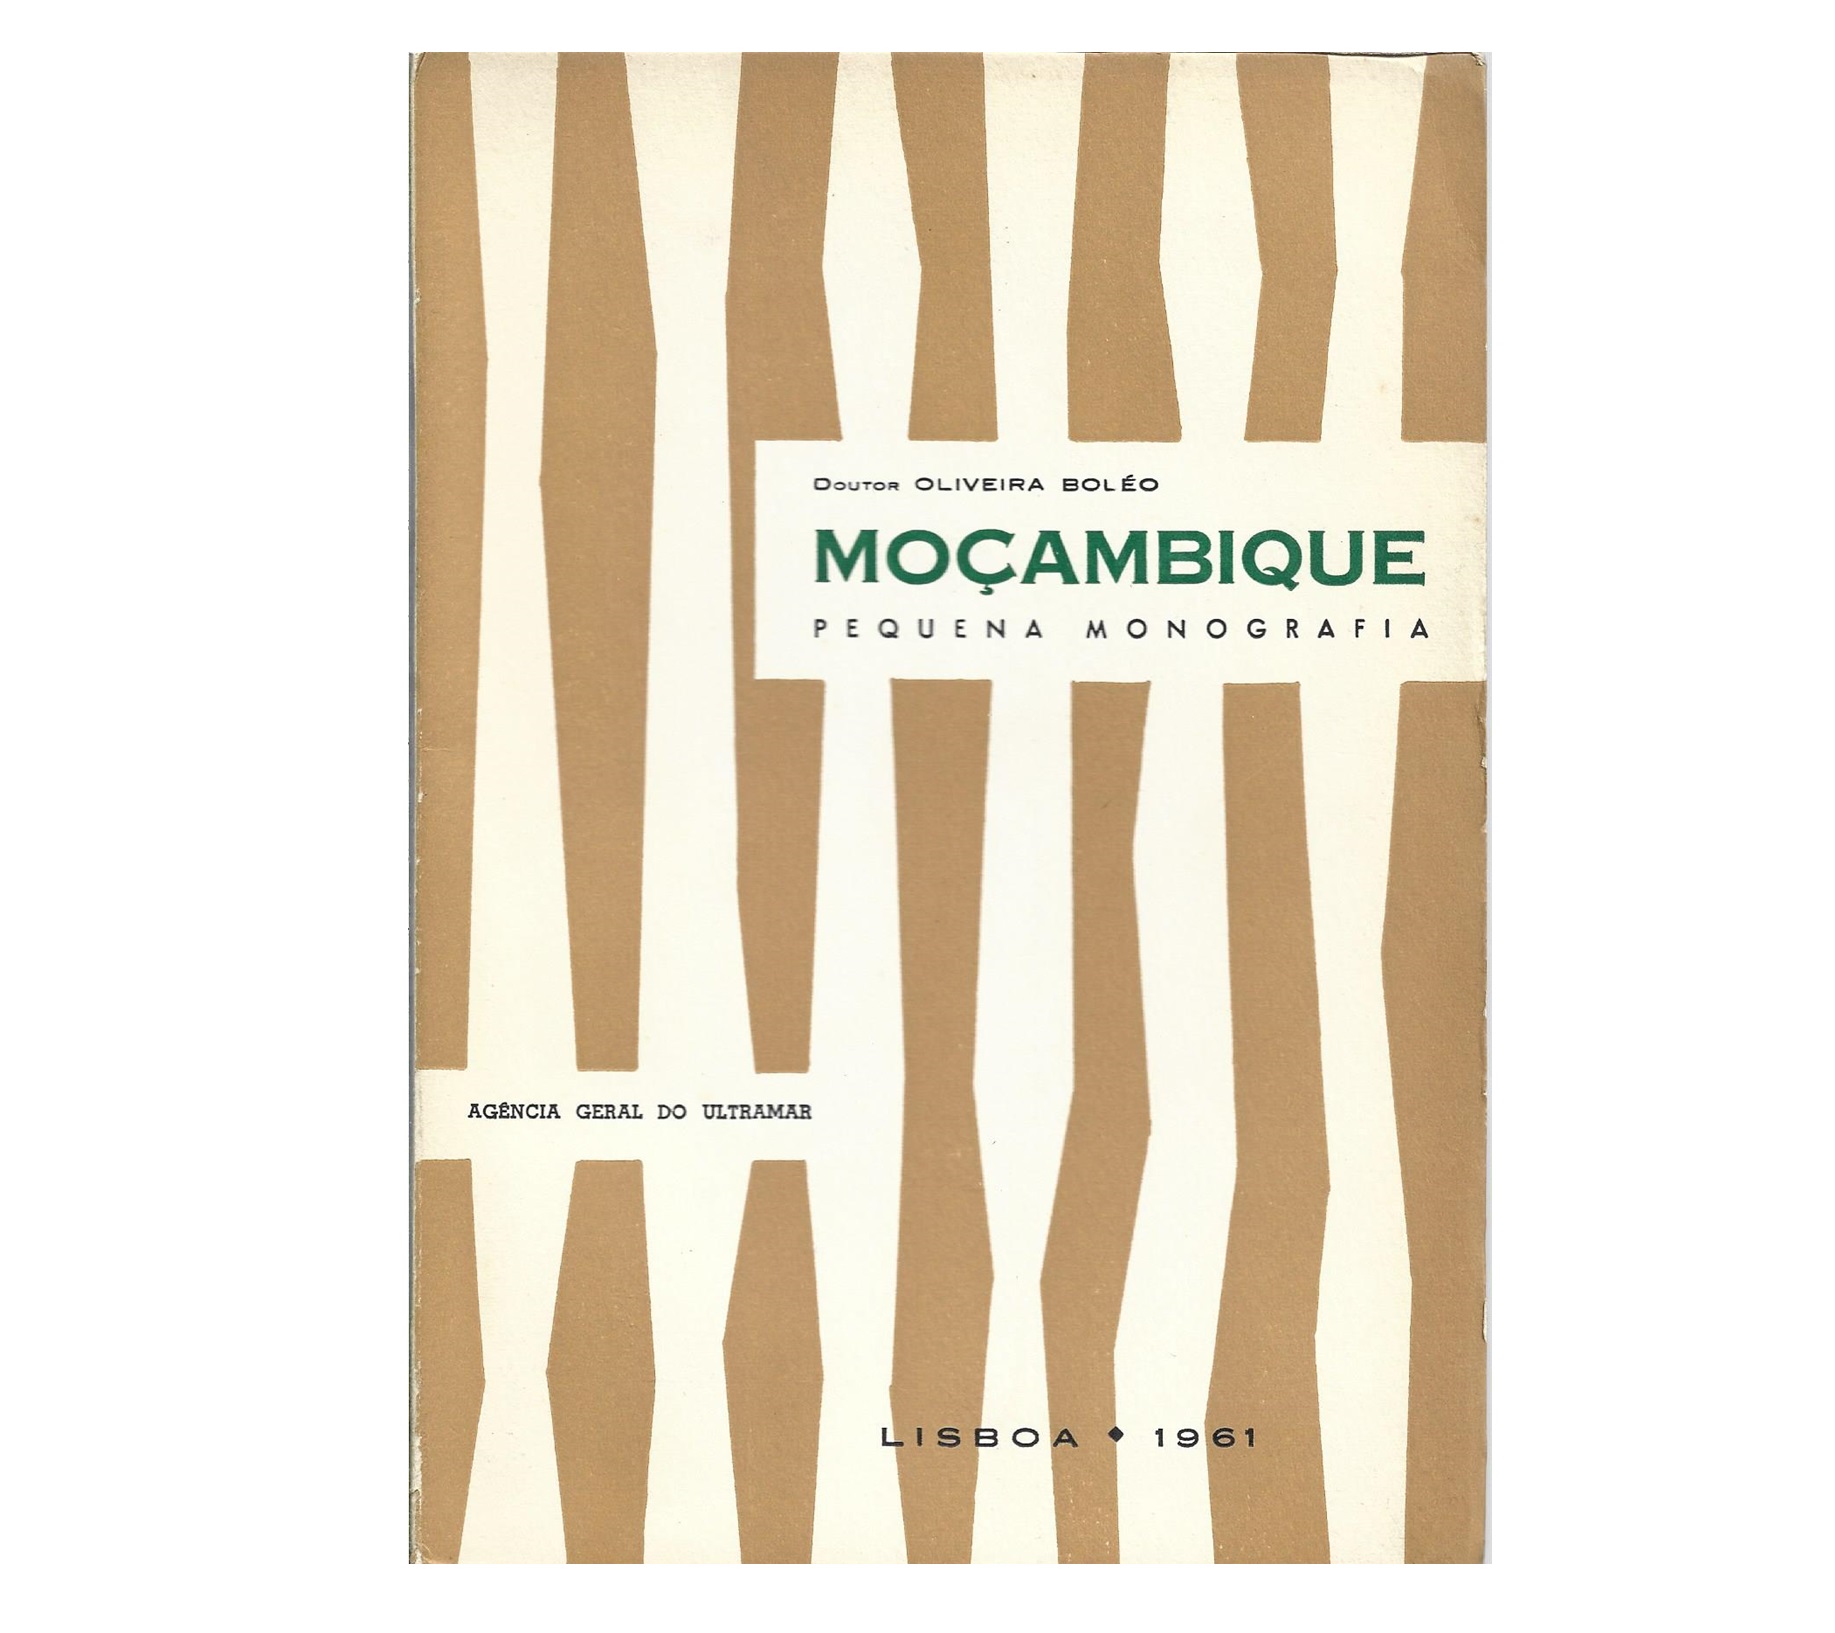 MOÇAMBIQUE. PEQUENA MONOGRAFIA